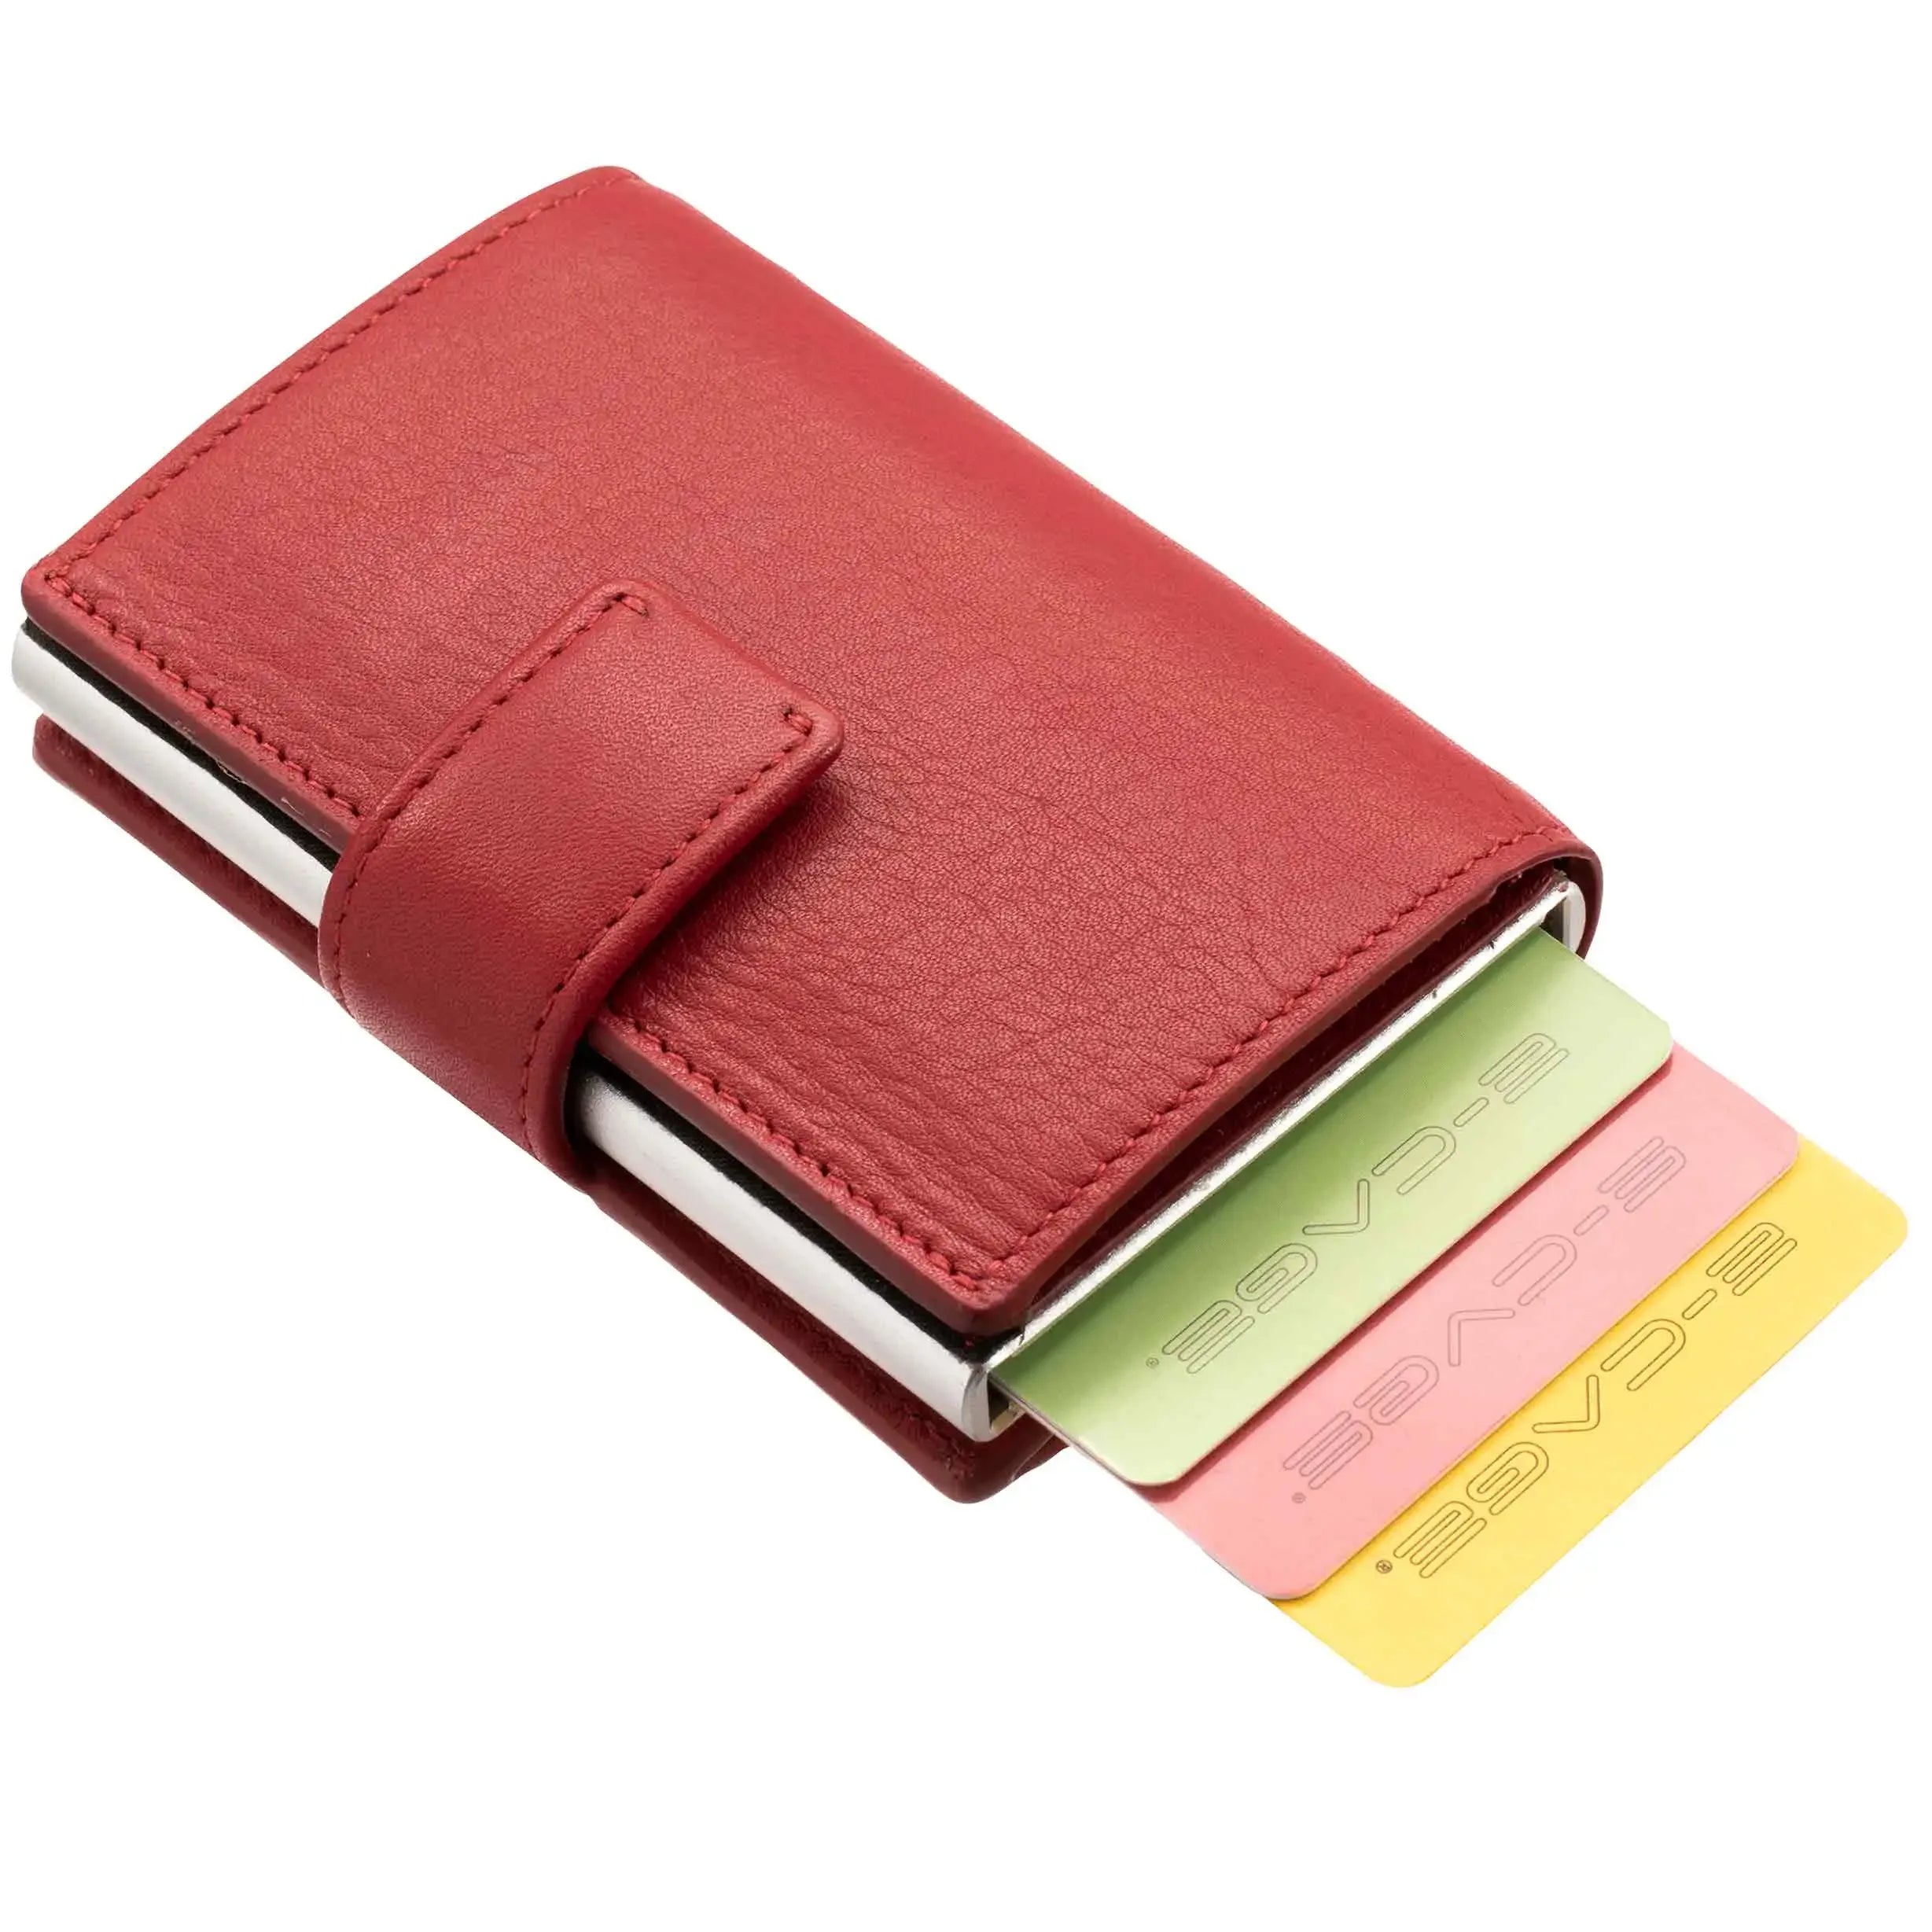 Maitre F3 C-Three E-Cage SV8 wallet 10 cm - Red